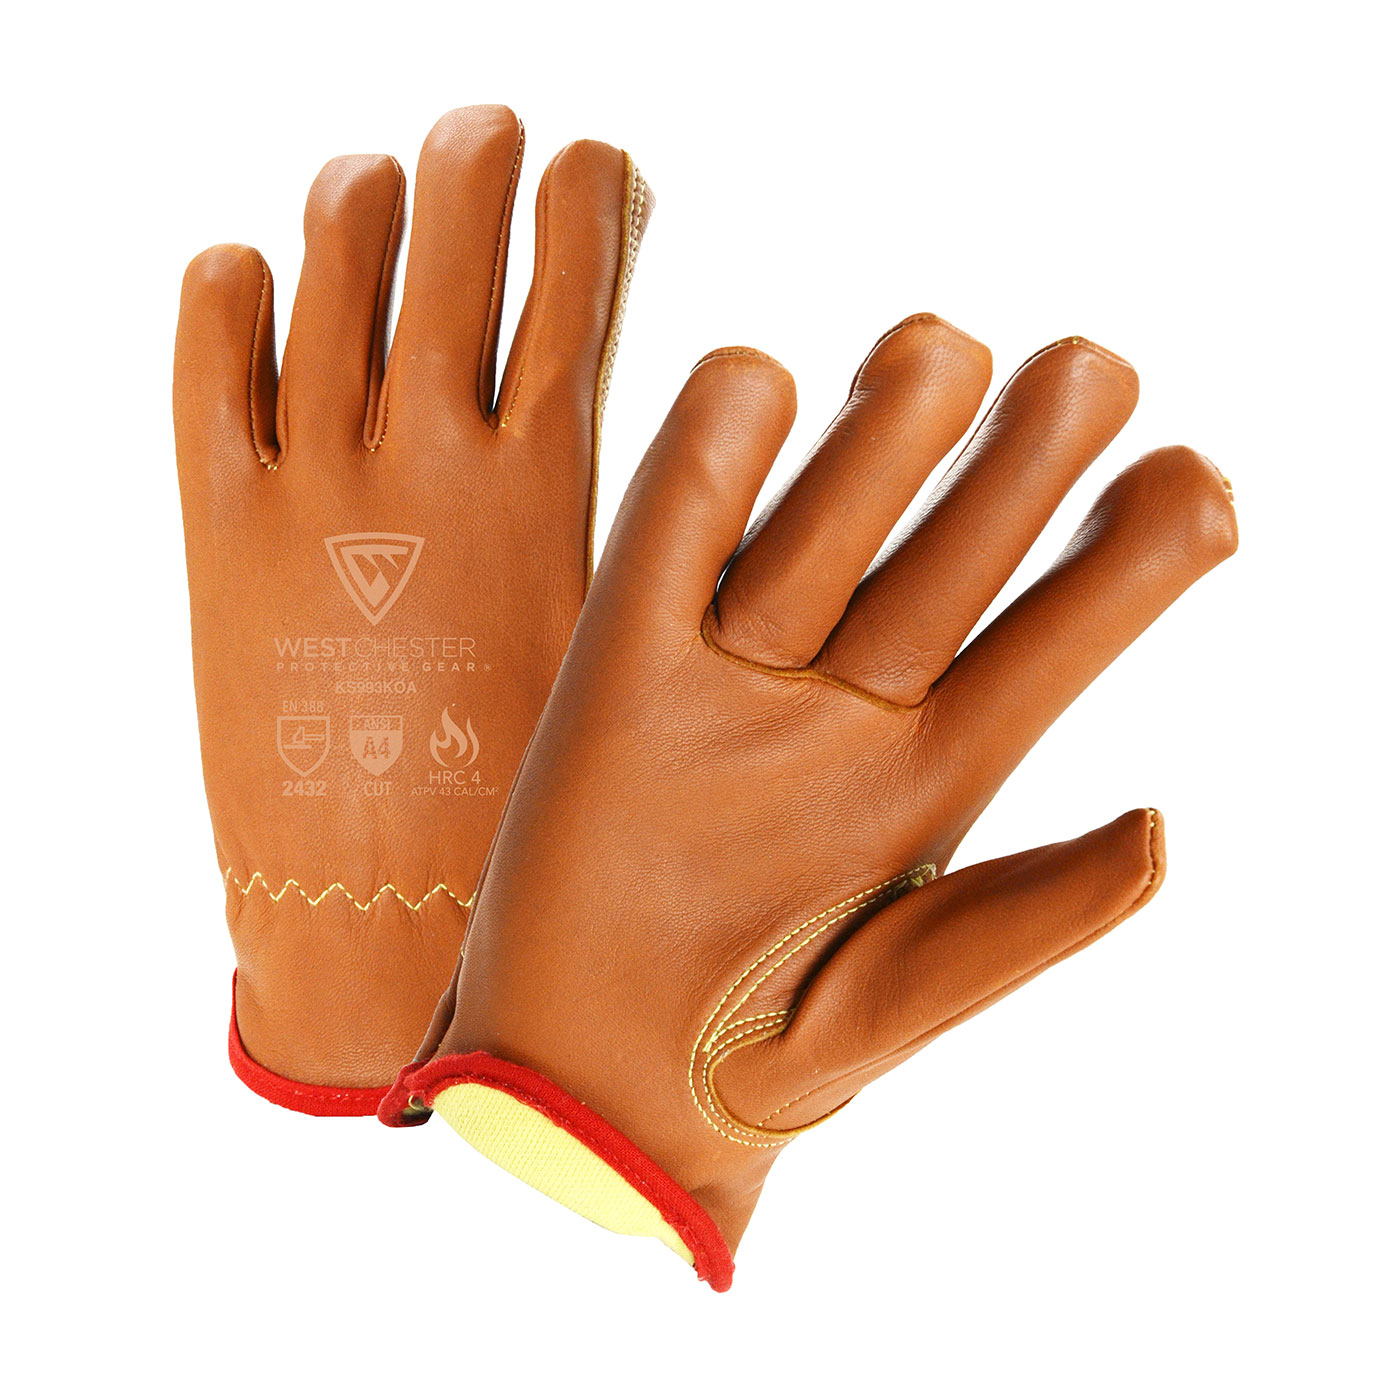 KS993KOA PIP® West Chester® Top Grain Goatskin Leather Drivers Glove with Para-Aramid Lining and Keystone Thumb feature Oil Armor™